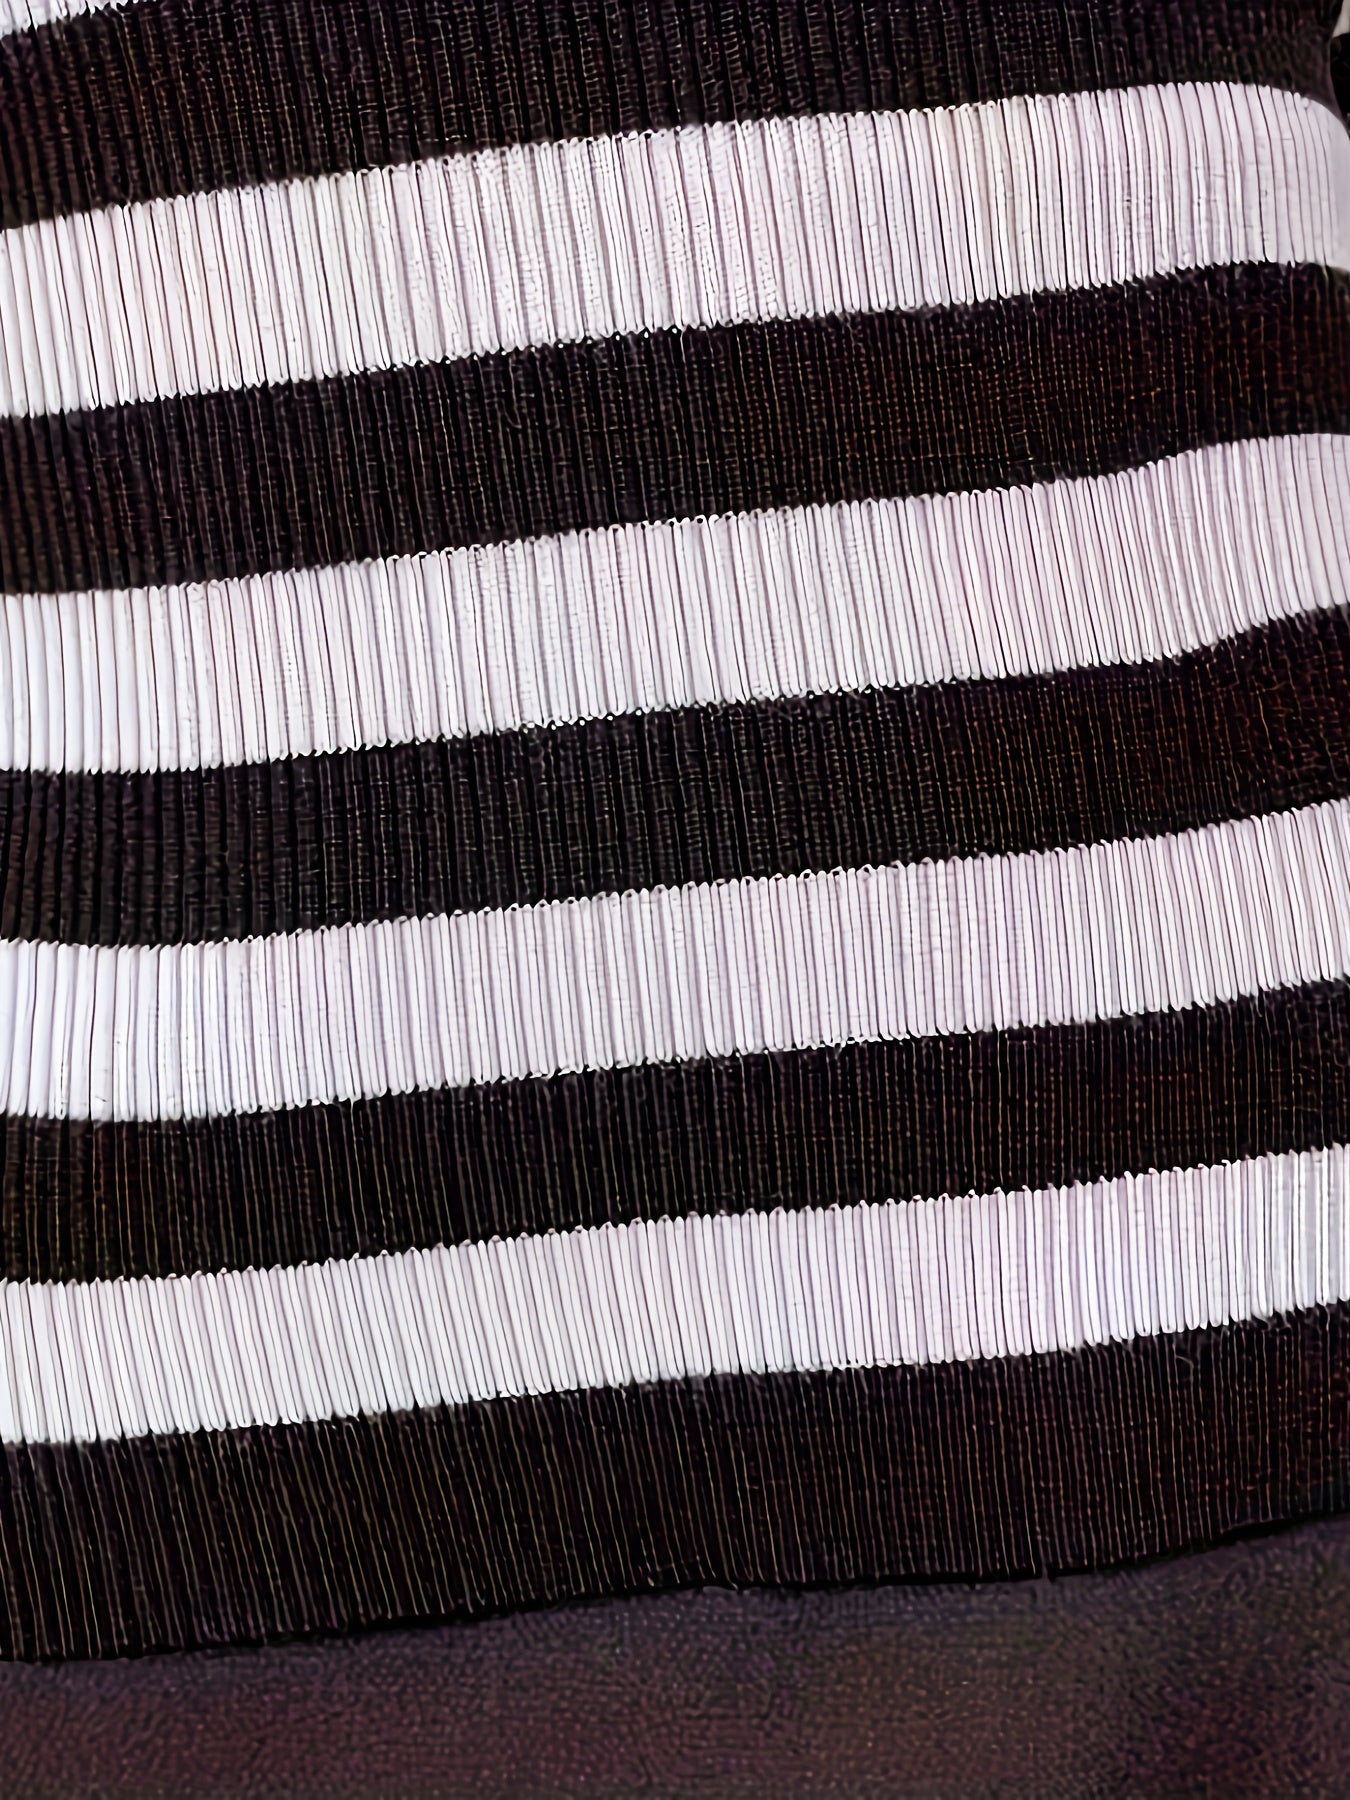 vlovelaw  Striped V Neck Knitted Top, Vintage Long Sleeve Slim Sweater, Women's Clothing